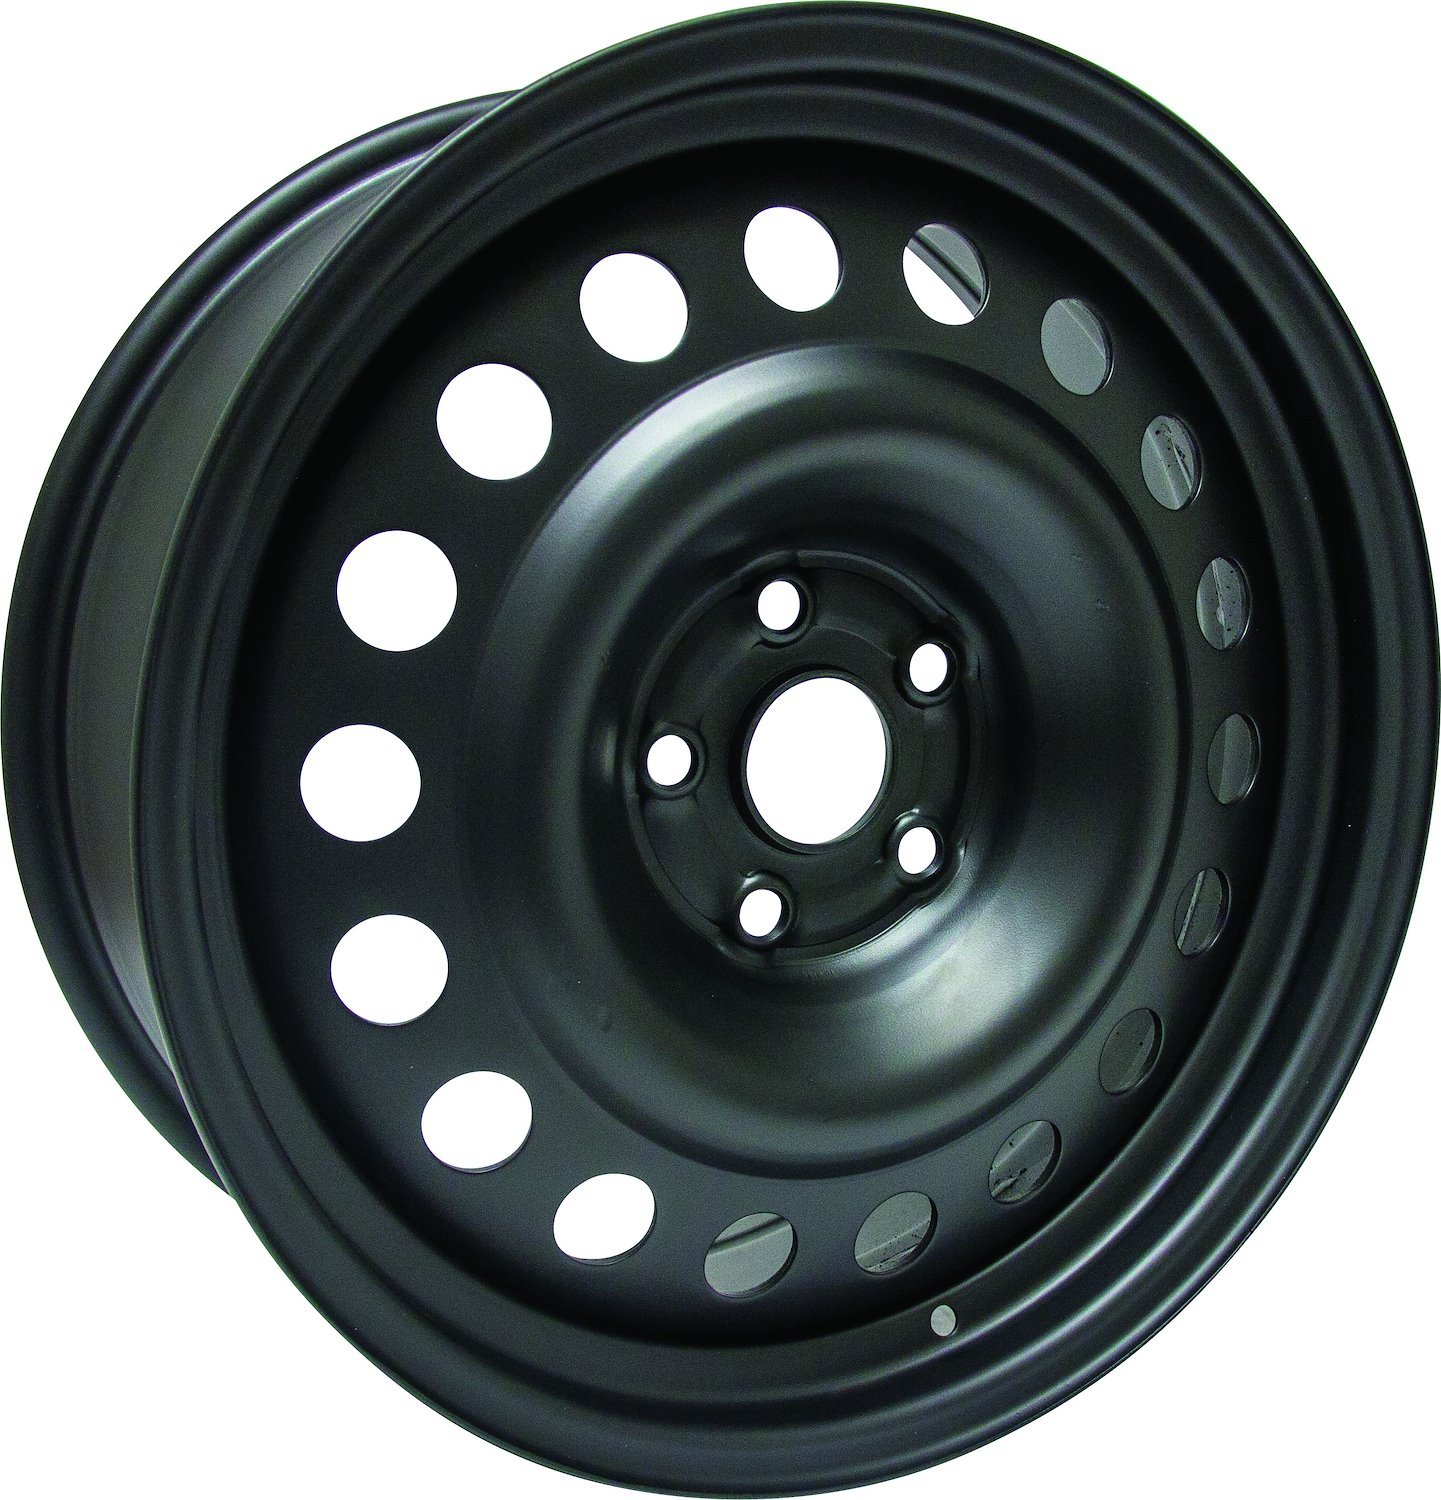 X48512 Steel Wheel [Size: 18" x 7.50"] Black Finish